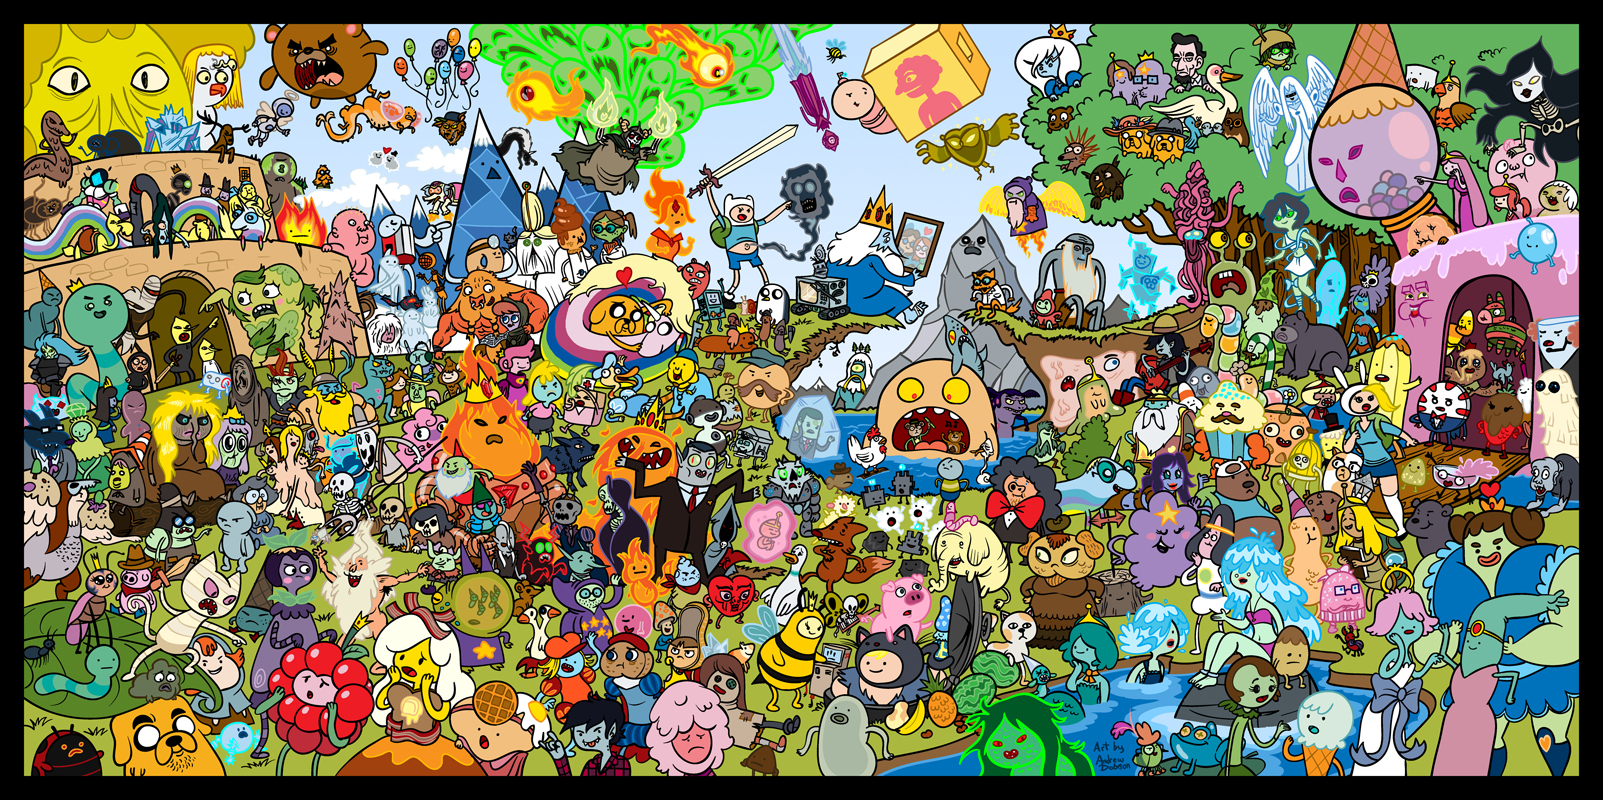 50 Adventure Time Live Wallpaper On Wallpapersafari